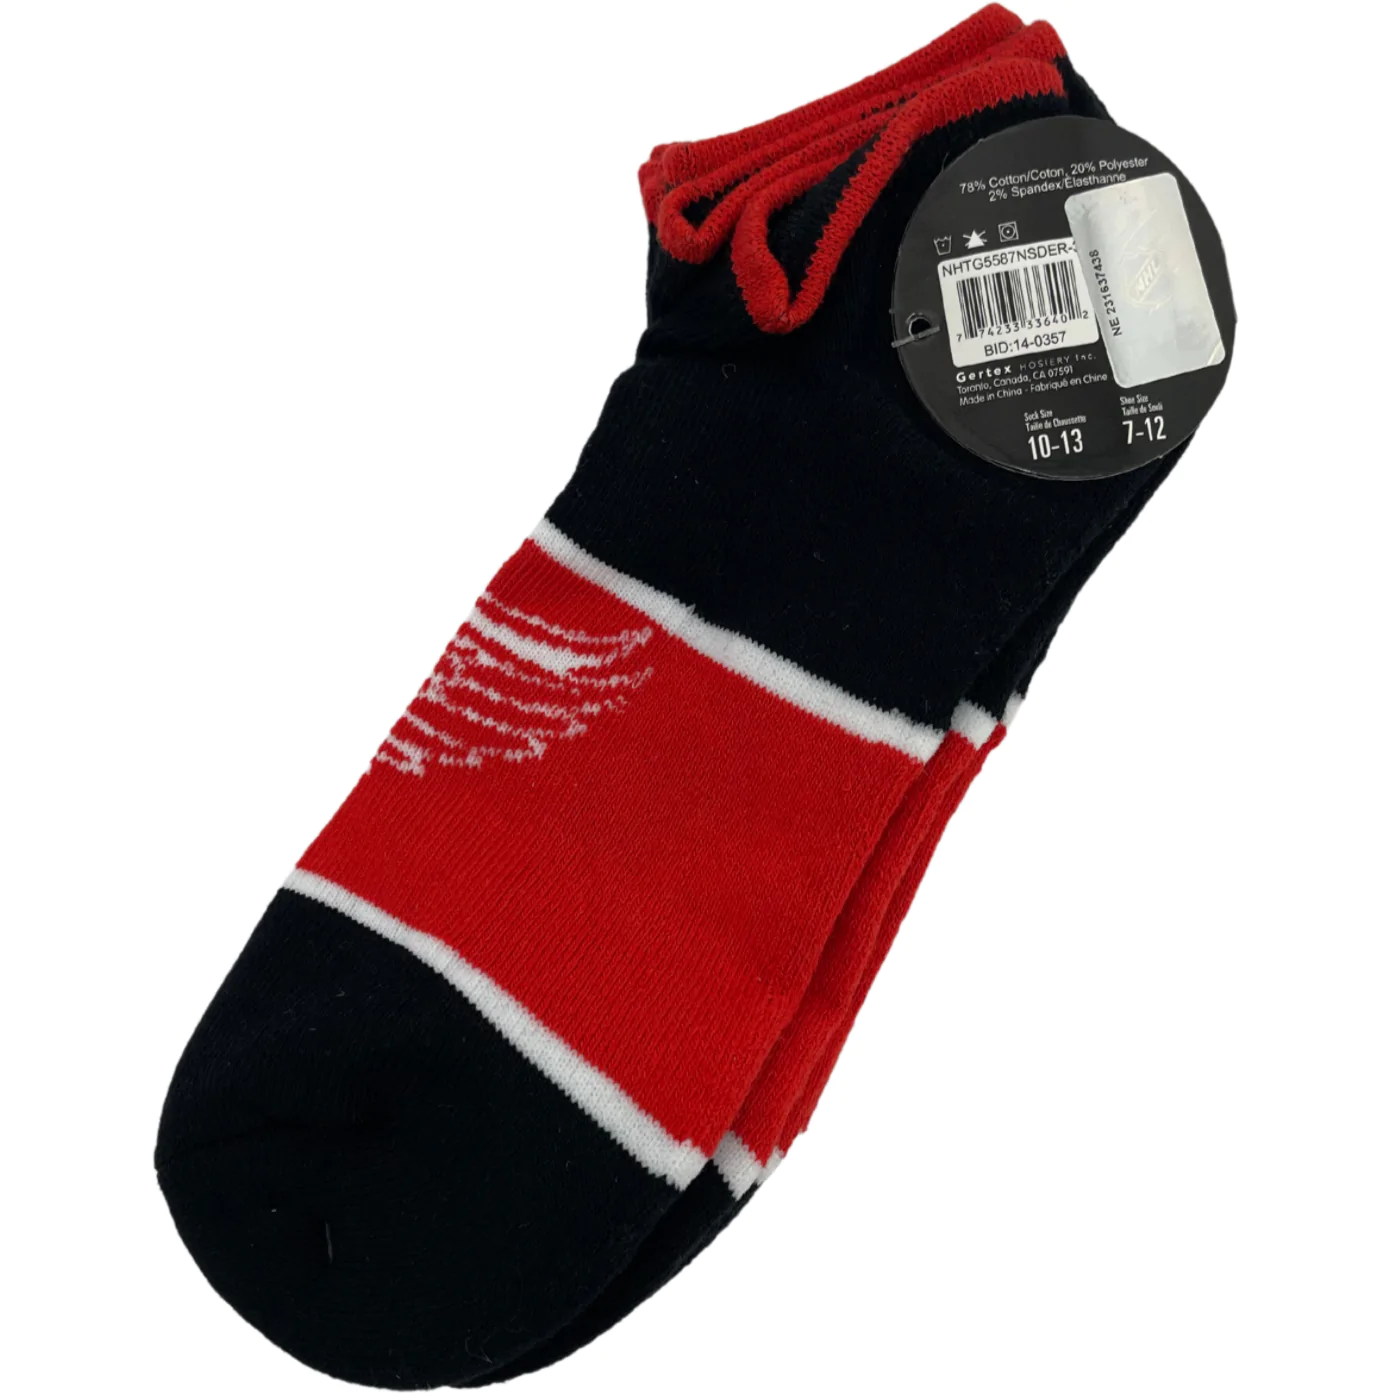 NHL Men's Socks / Detroit Red Wings / Ankle Socks / 3 Pack / Black and Red / Shoe Size 7-12